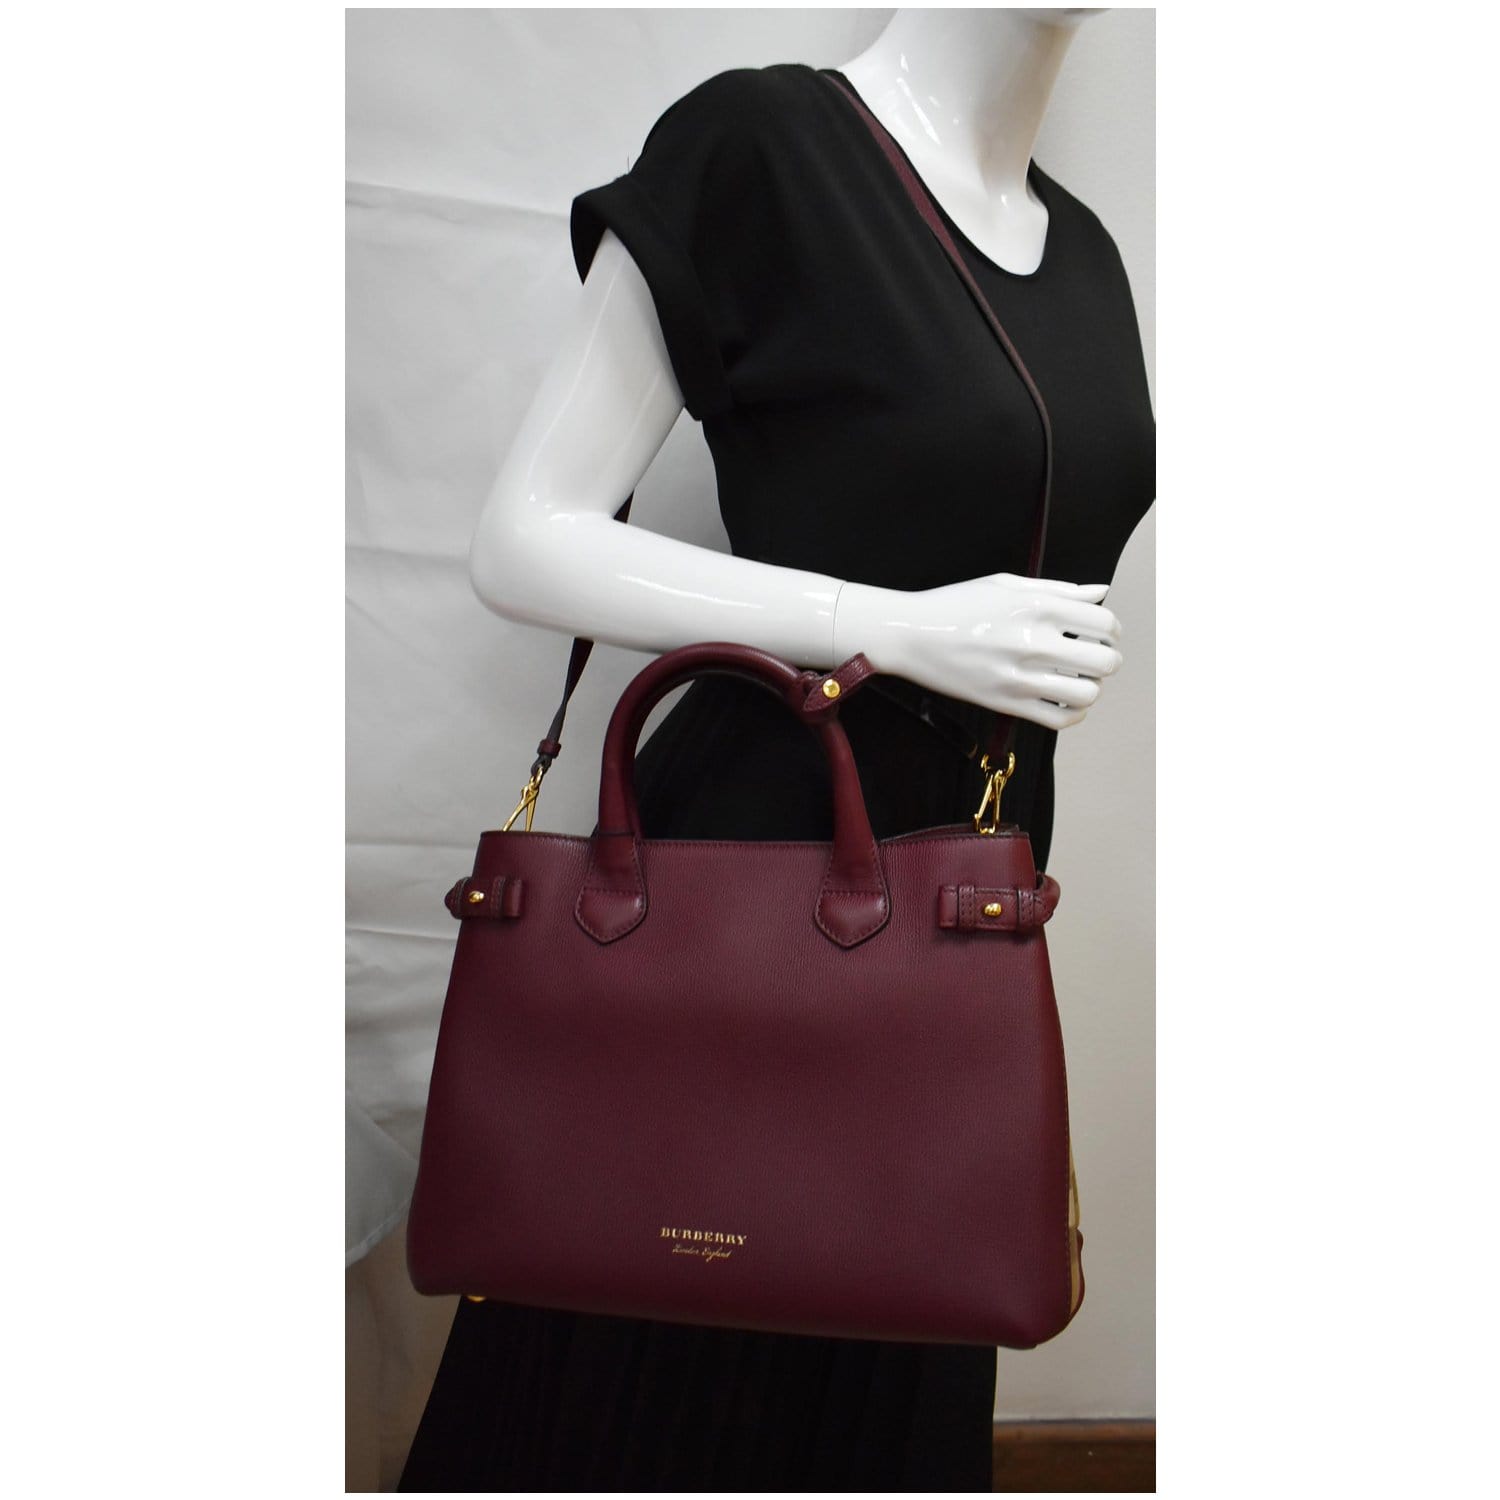 Burberry Monogram Tote & pouch shoulder Bag Handbag Brown Red